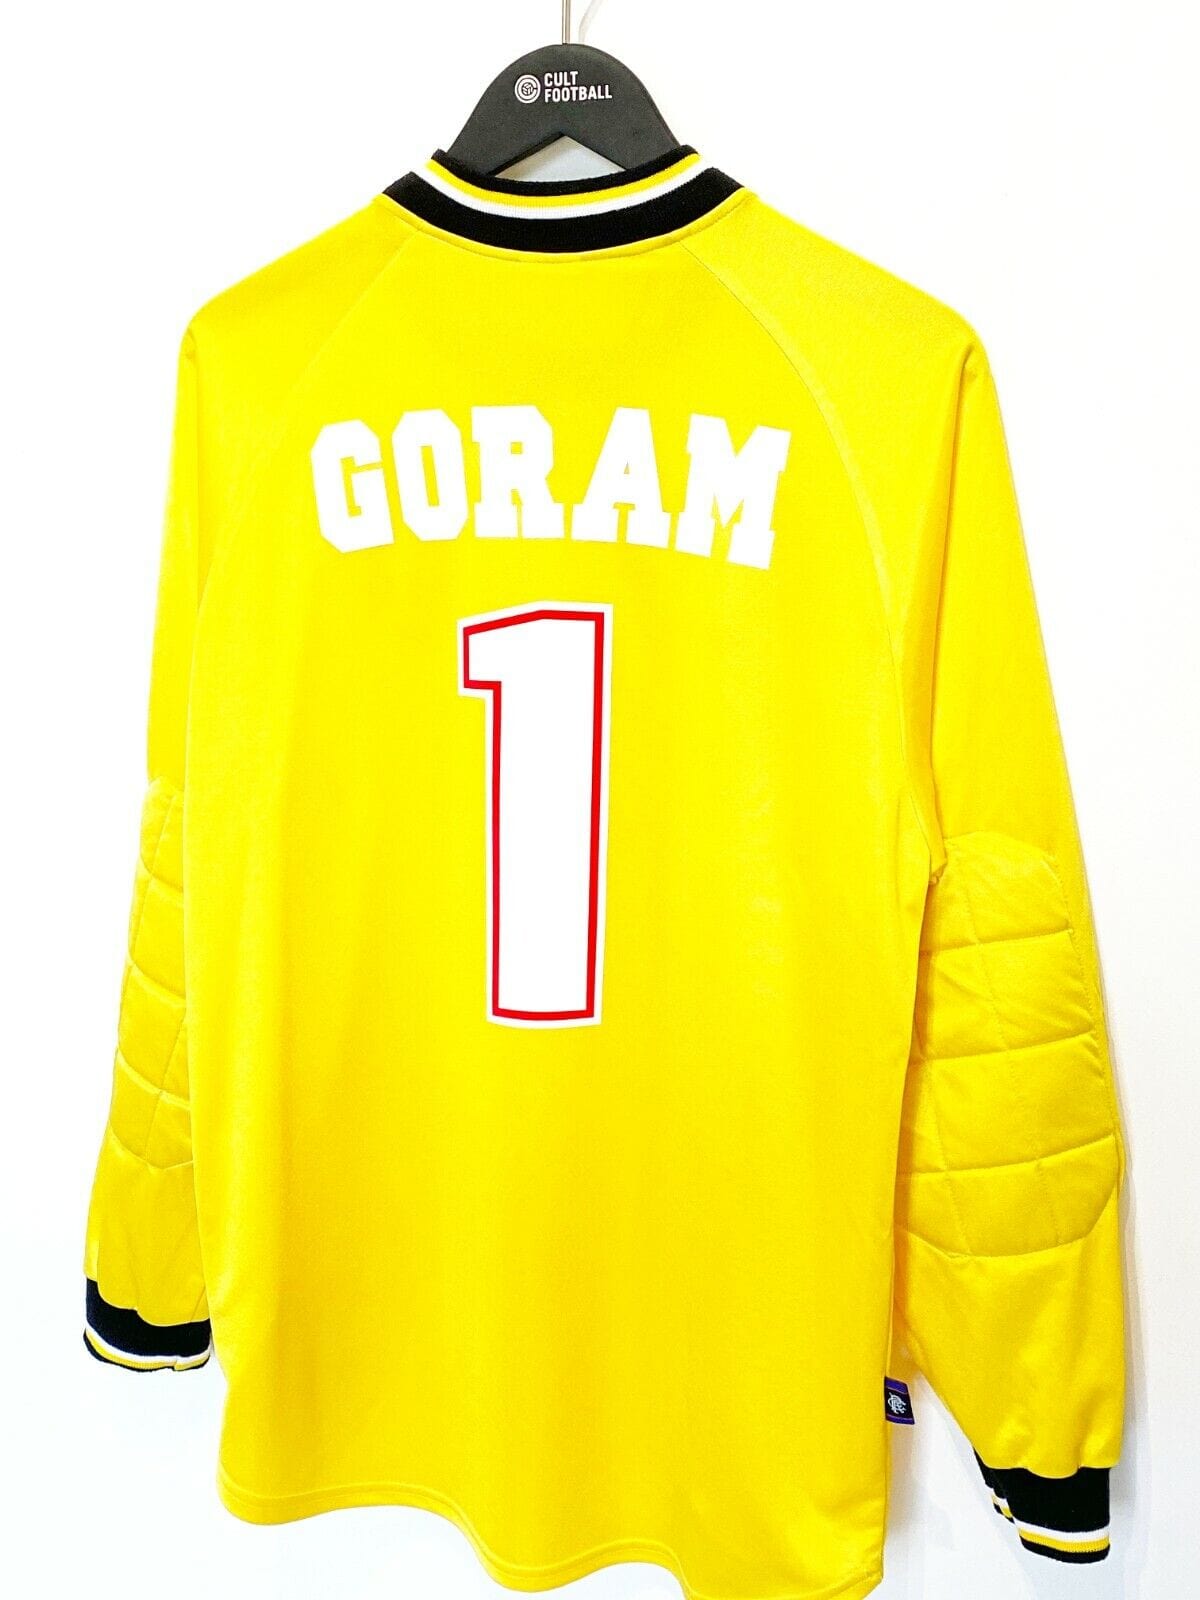 1997/98 GORAM #1 Rangers Vintage Nike Home GK Football Shirt (M